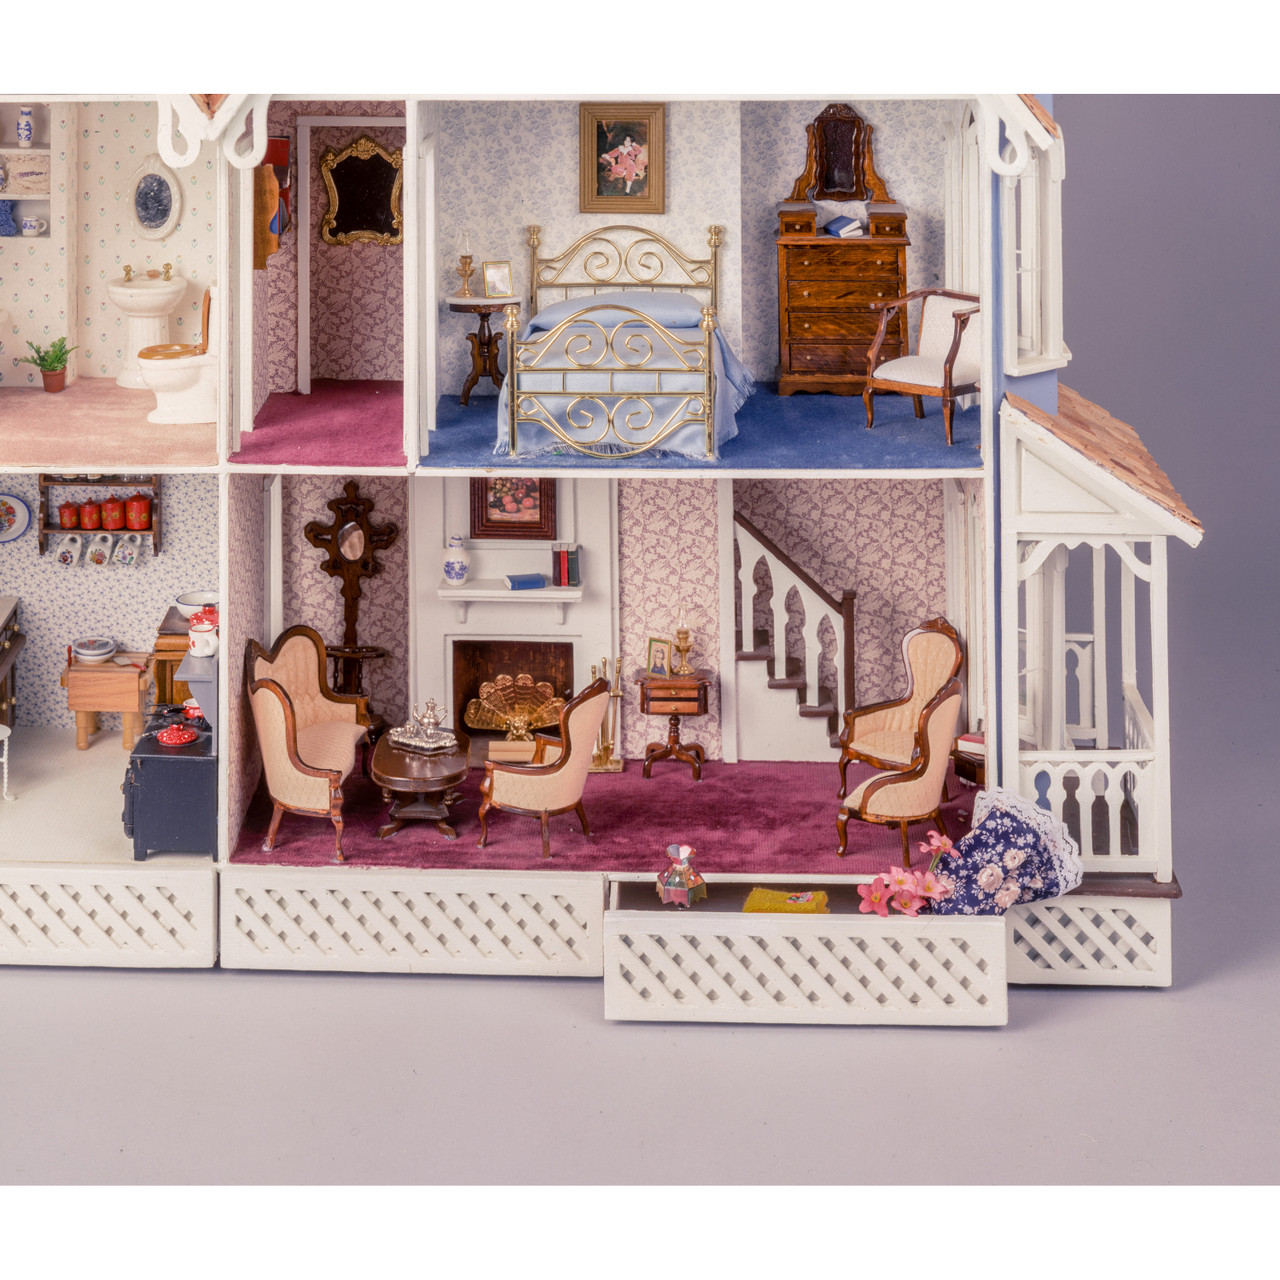 Creekside Cabin Dollhouse Kit by Greenleaf Dollhouses -  Portugal